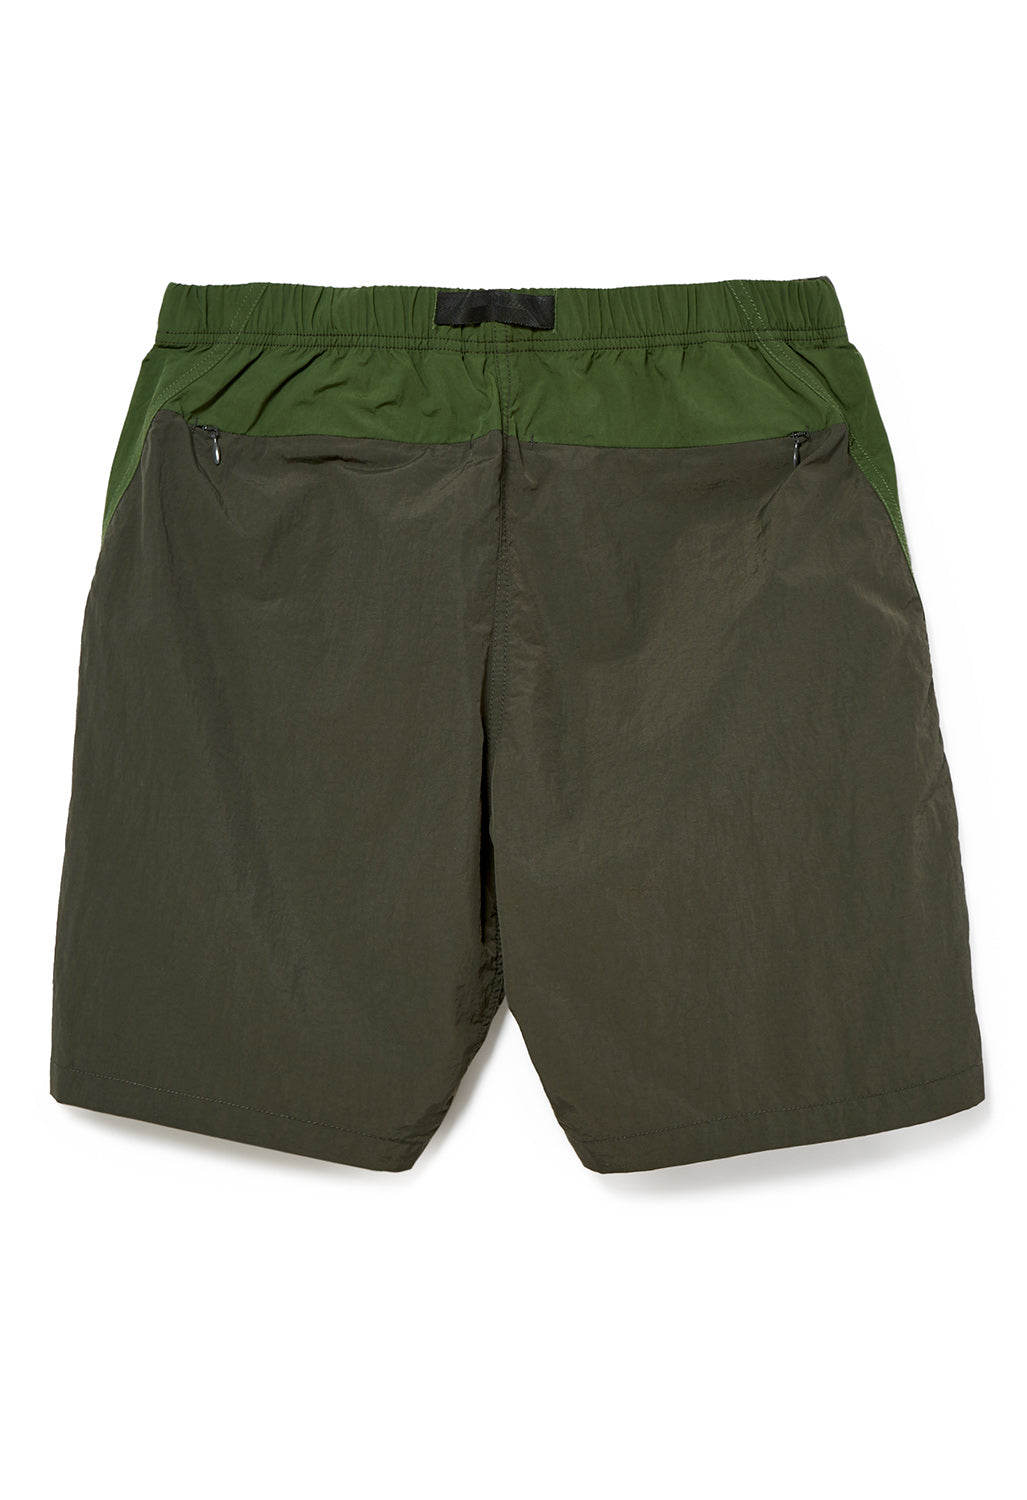 Gramicci Men's River Bank Shorts - Black Ink/Green